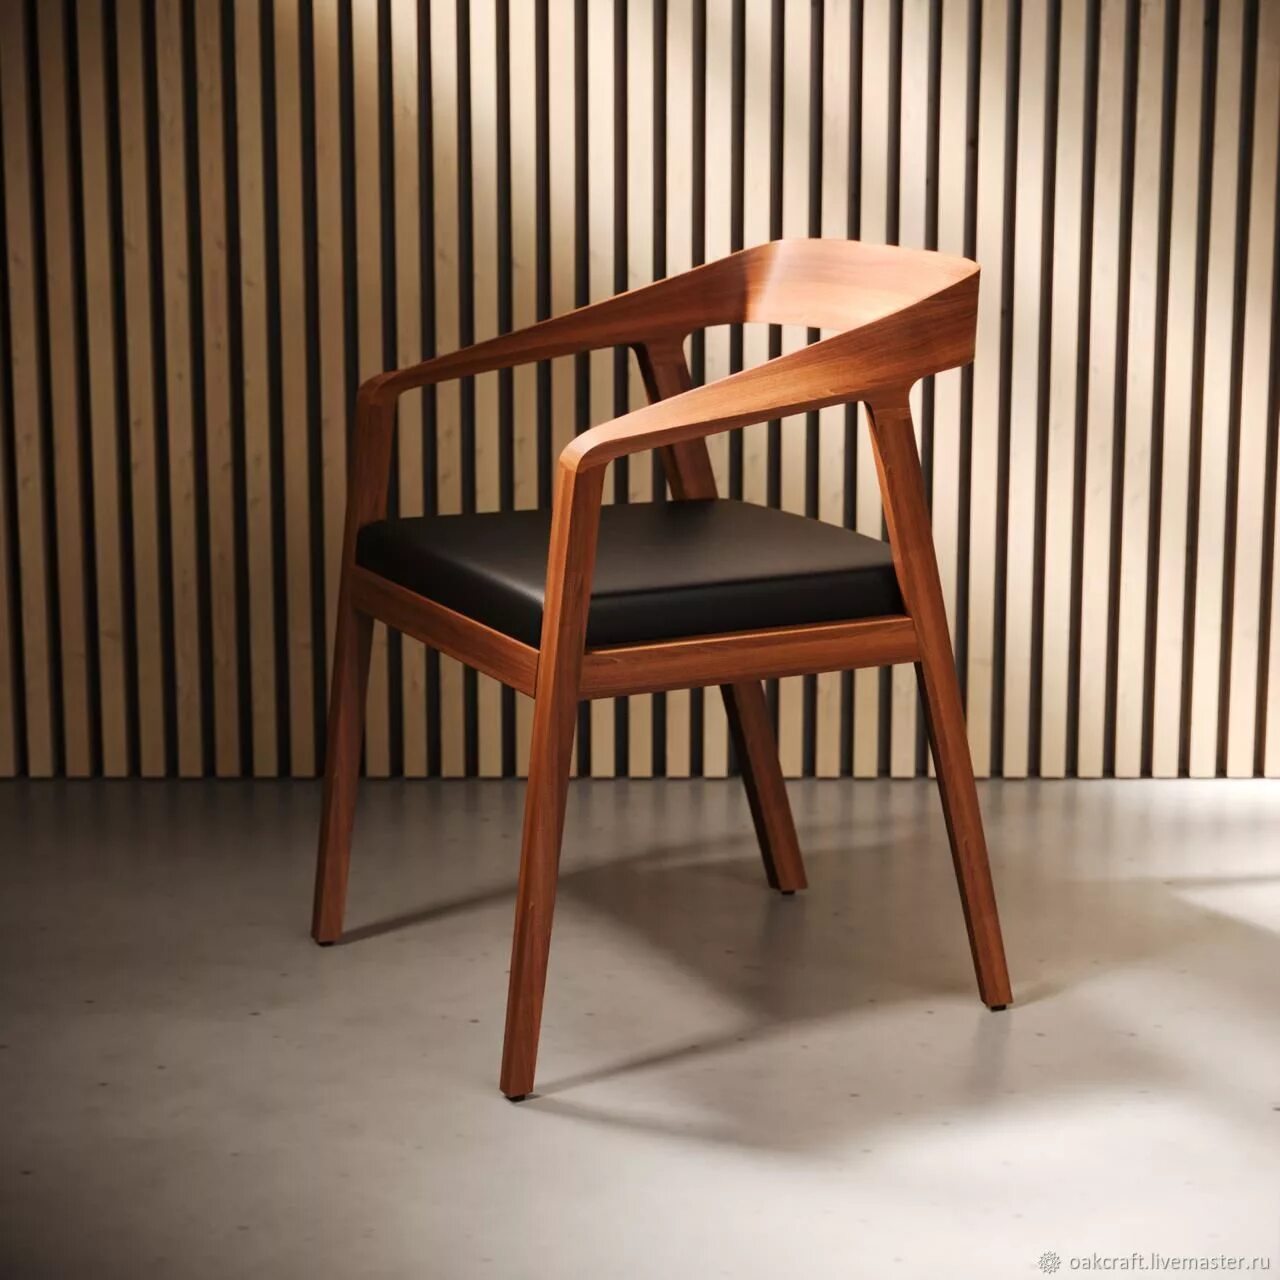 Wooden chair. Стулья МИД сенчури с подлокотниками. Деревянные стулья МИД сенчури. Wooden-micimbgv стул. Деревянные стулья лофт.